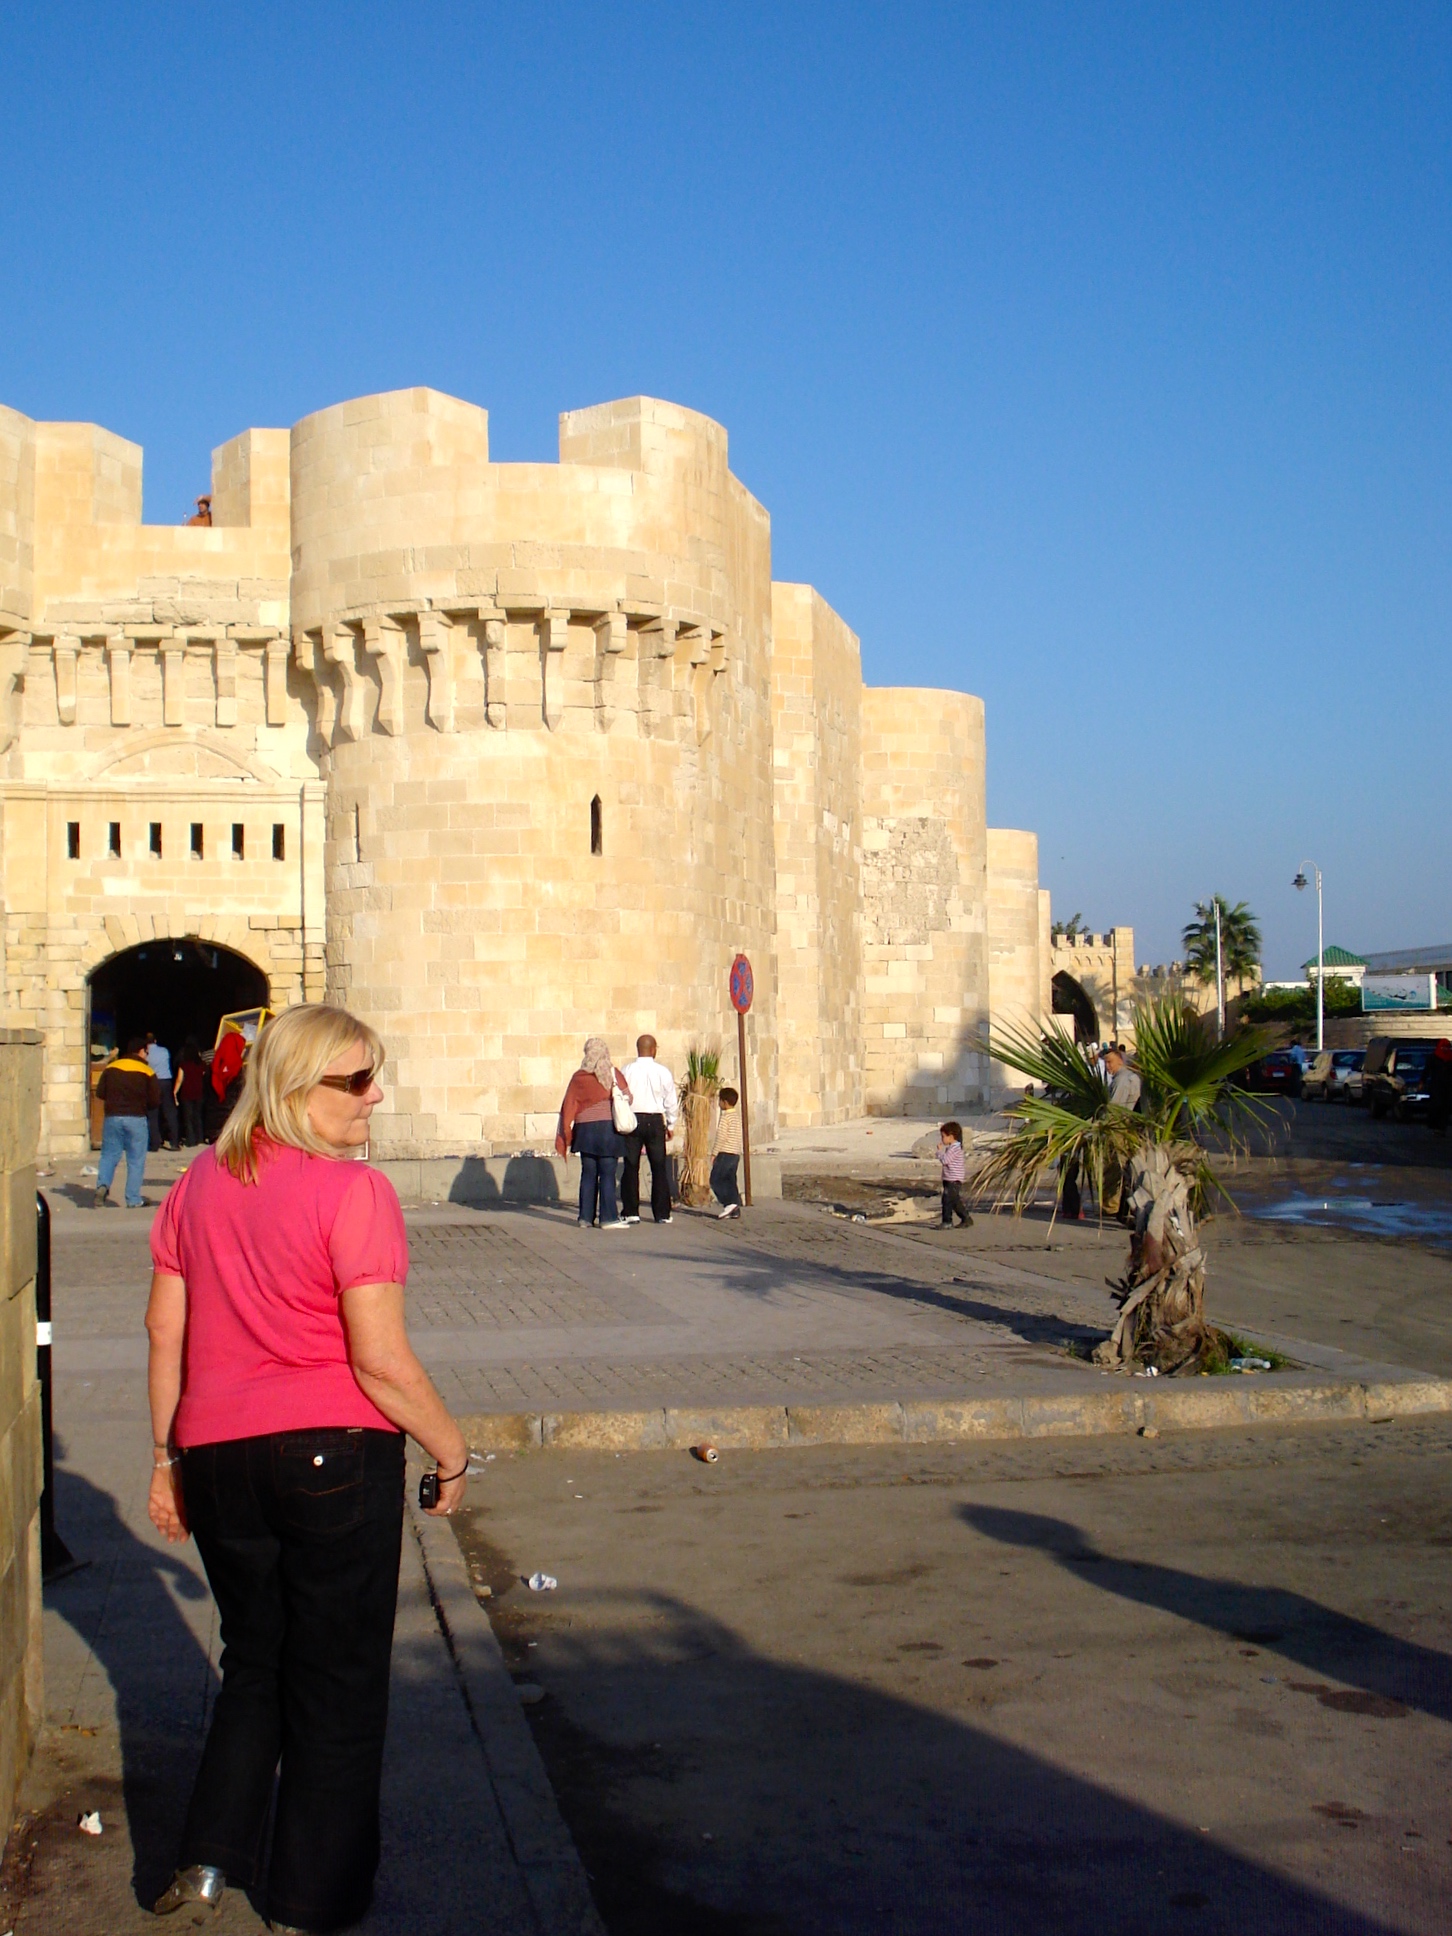 2010 in Alexandria at the Citadel of Qaitbay